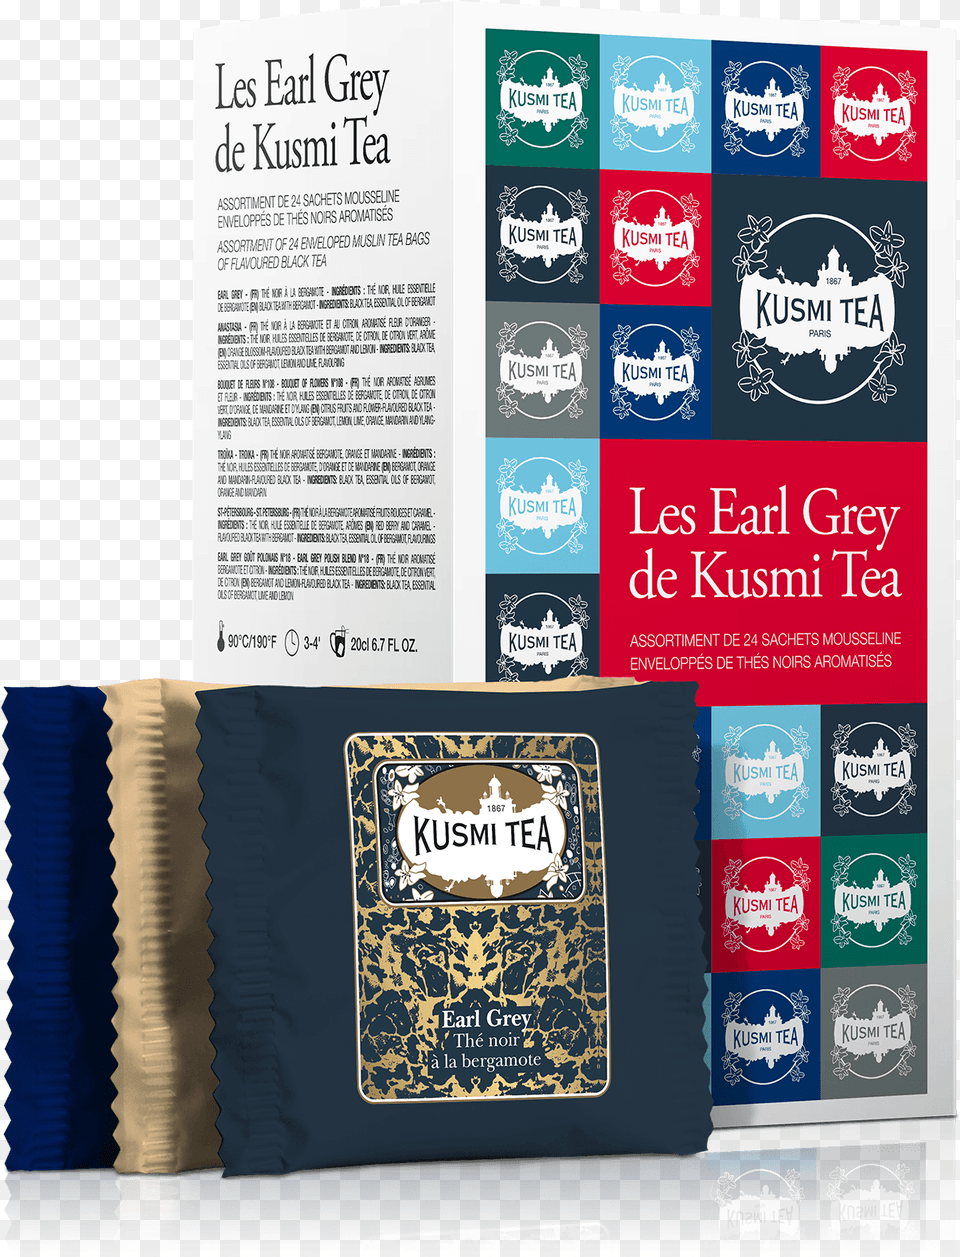 Kusmi Tea Bags, Advertisement, Poster Png Image